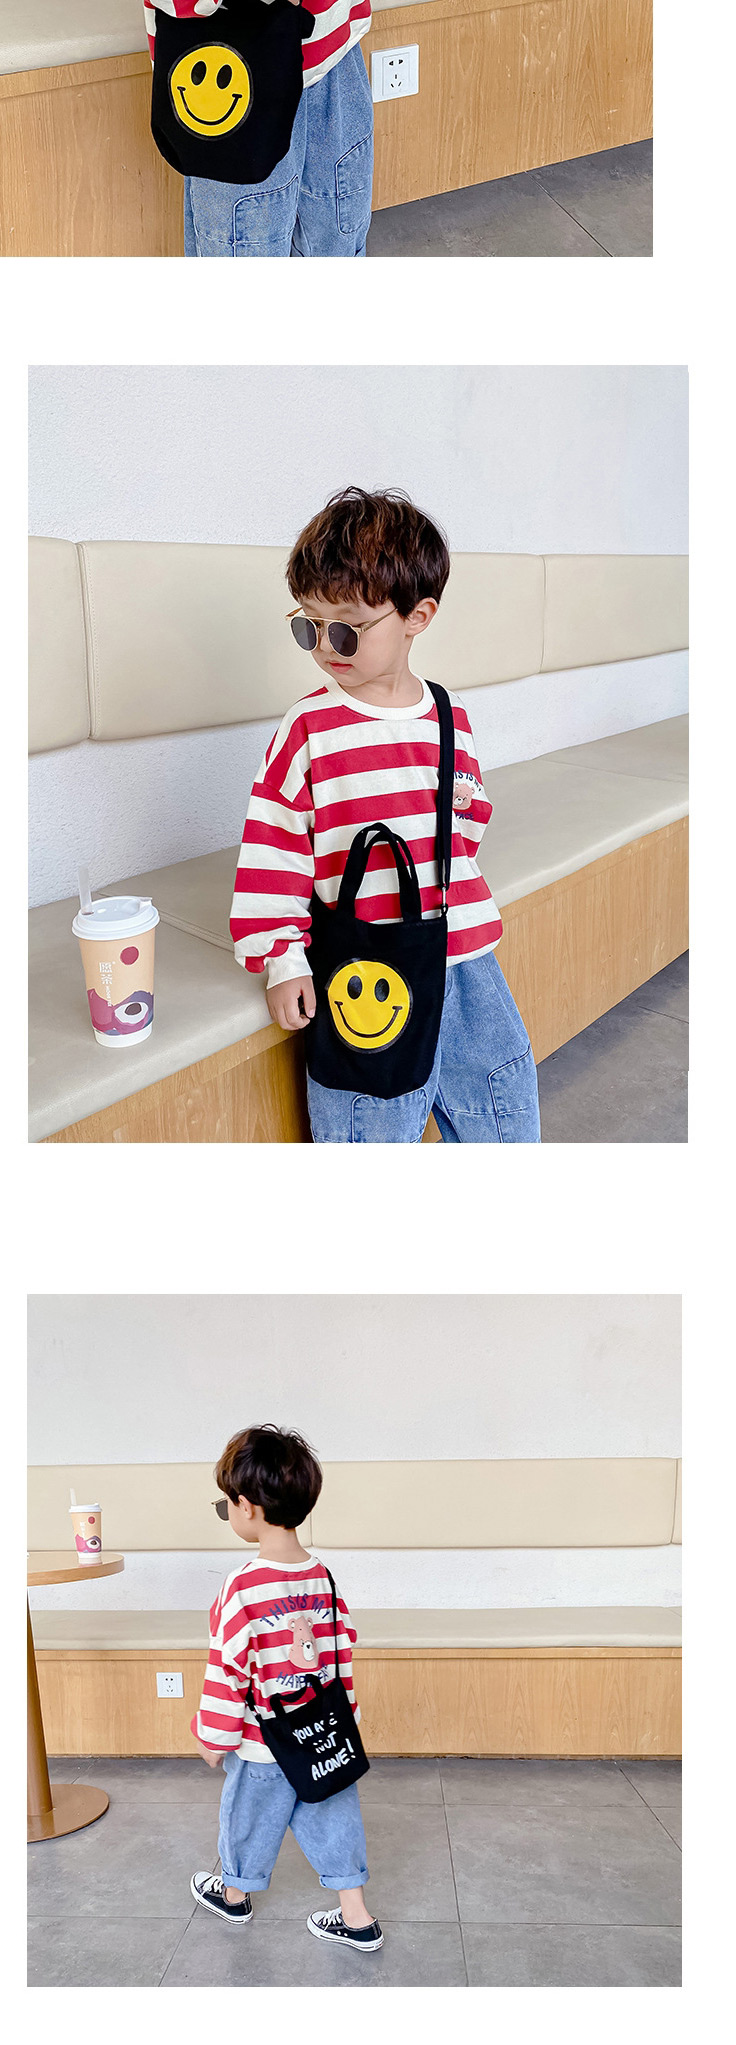 Fashion Blue Smiling Children Cartoon Handbag,Handbags